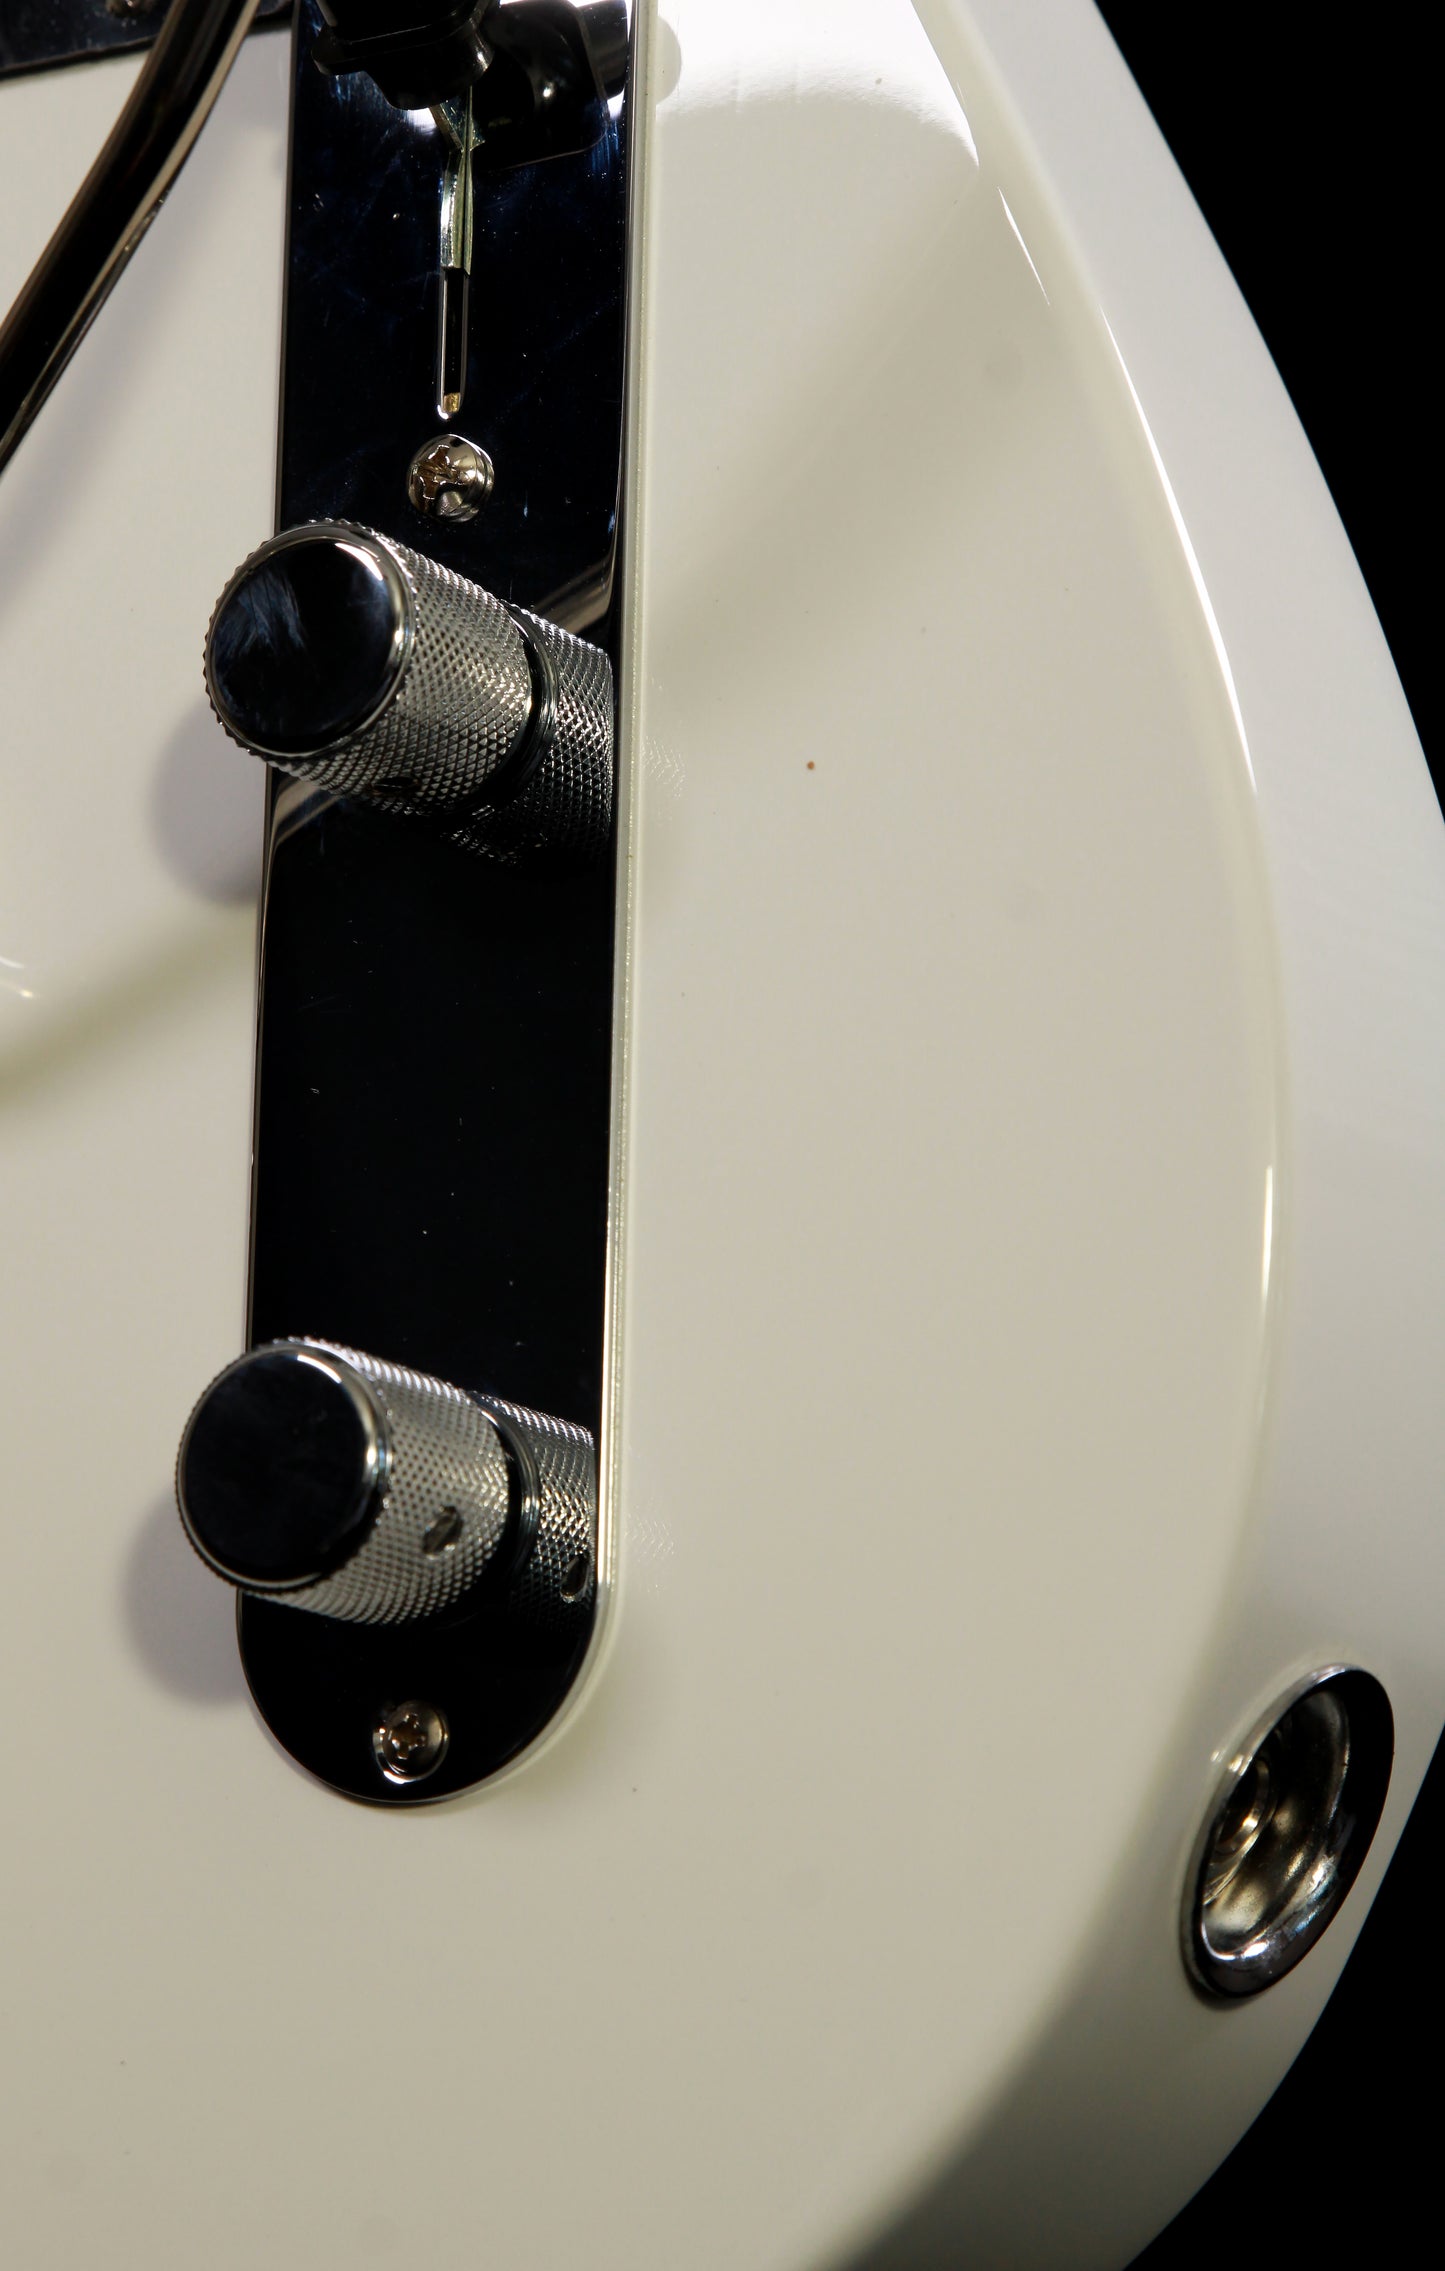 Fender Japan Miyavi Signature Telecaster Seymour Duncan, Maverick Tremolo, Sustainer